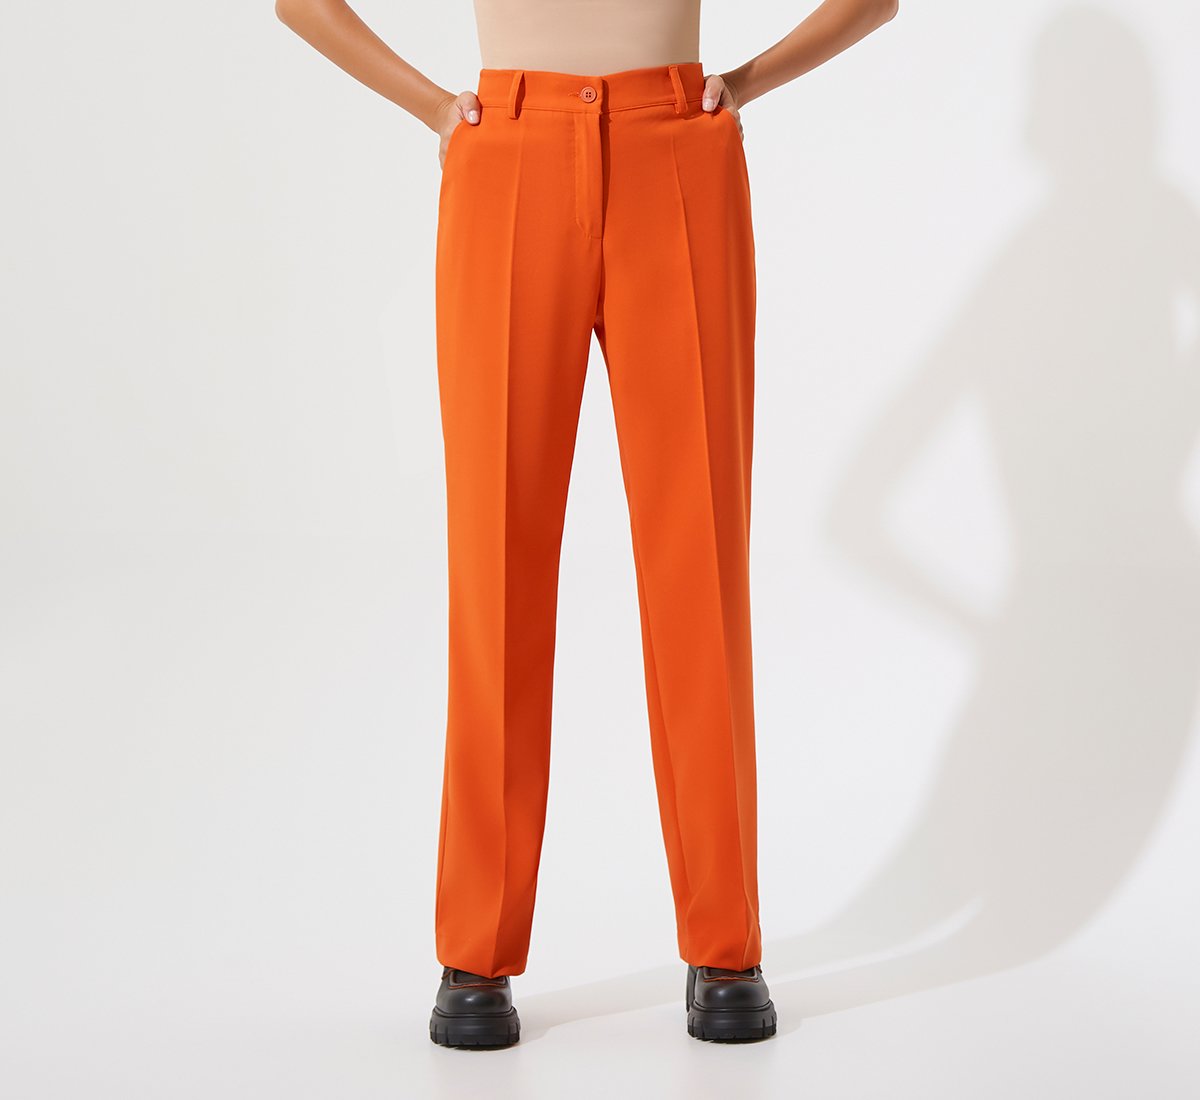 Pantalone arancione slim fit